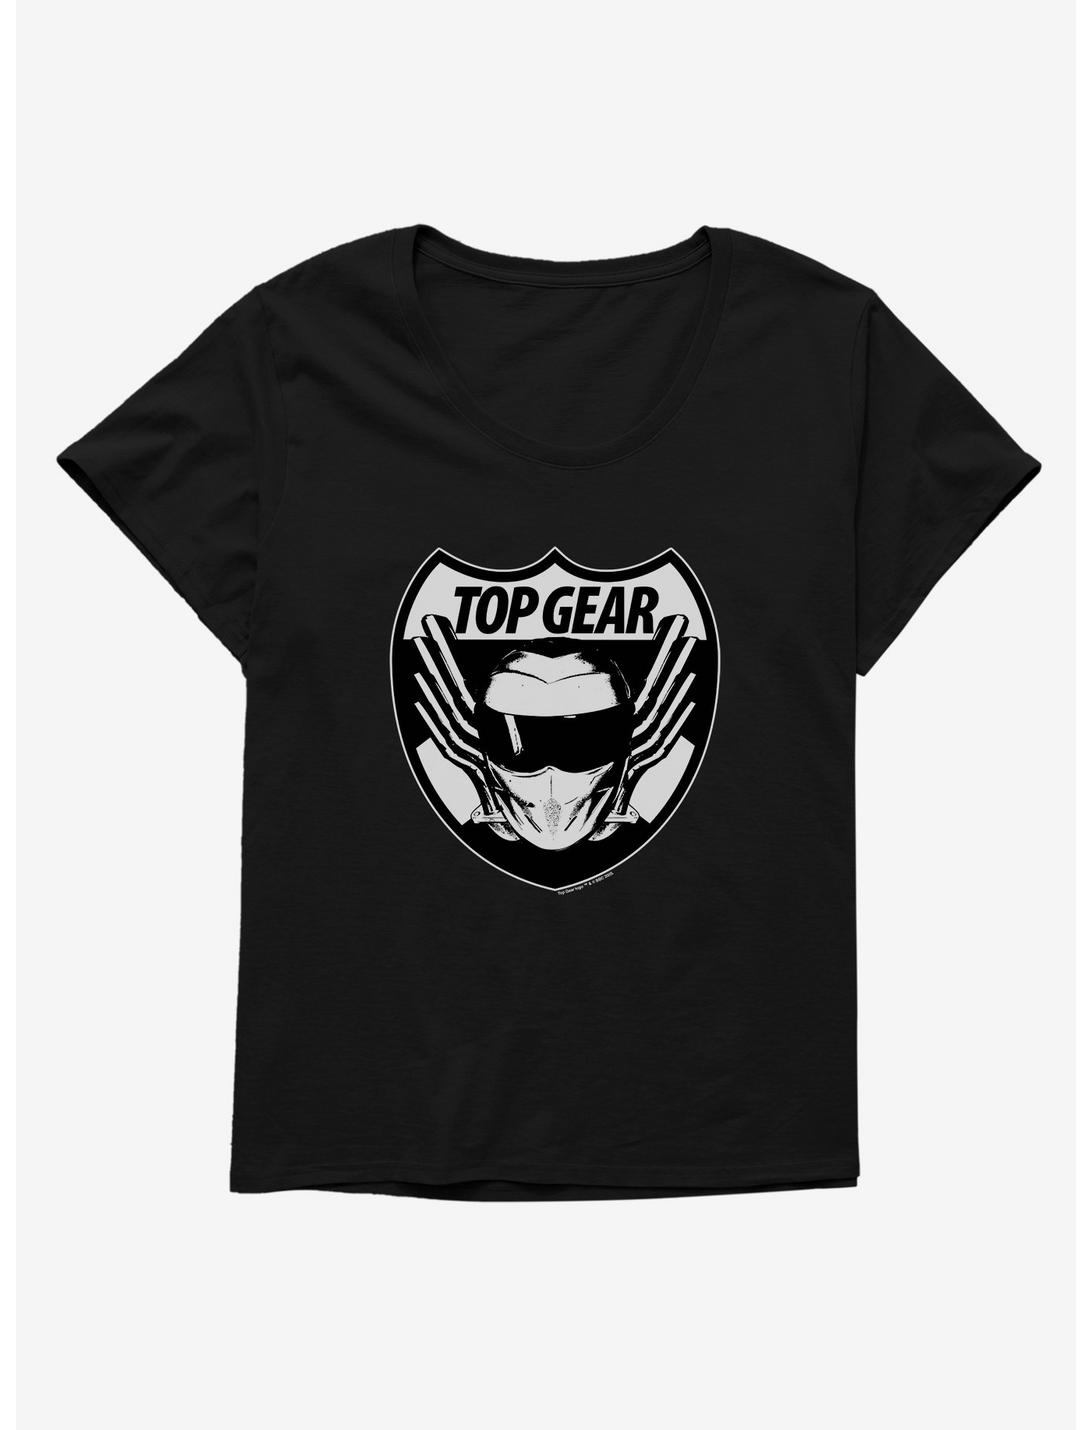 Top Gear Stig Badge Womens T-Shirt Plus Size, , hi-res